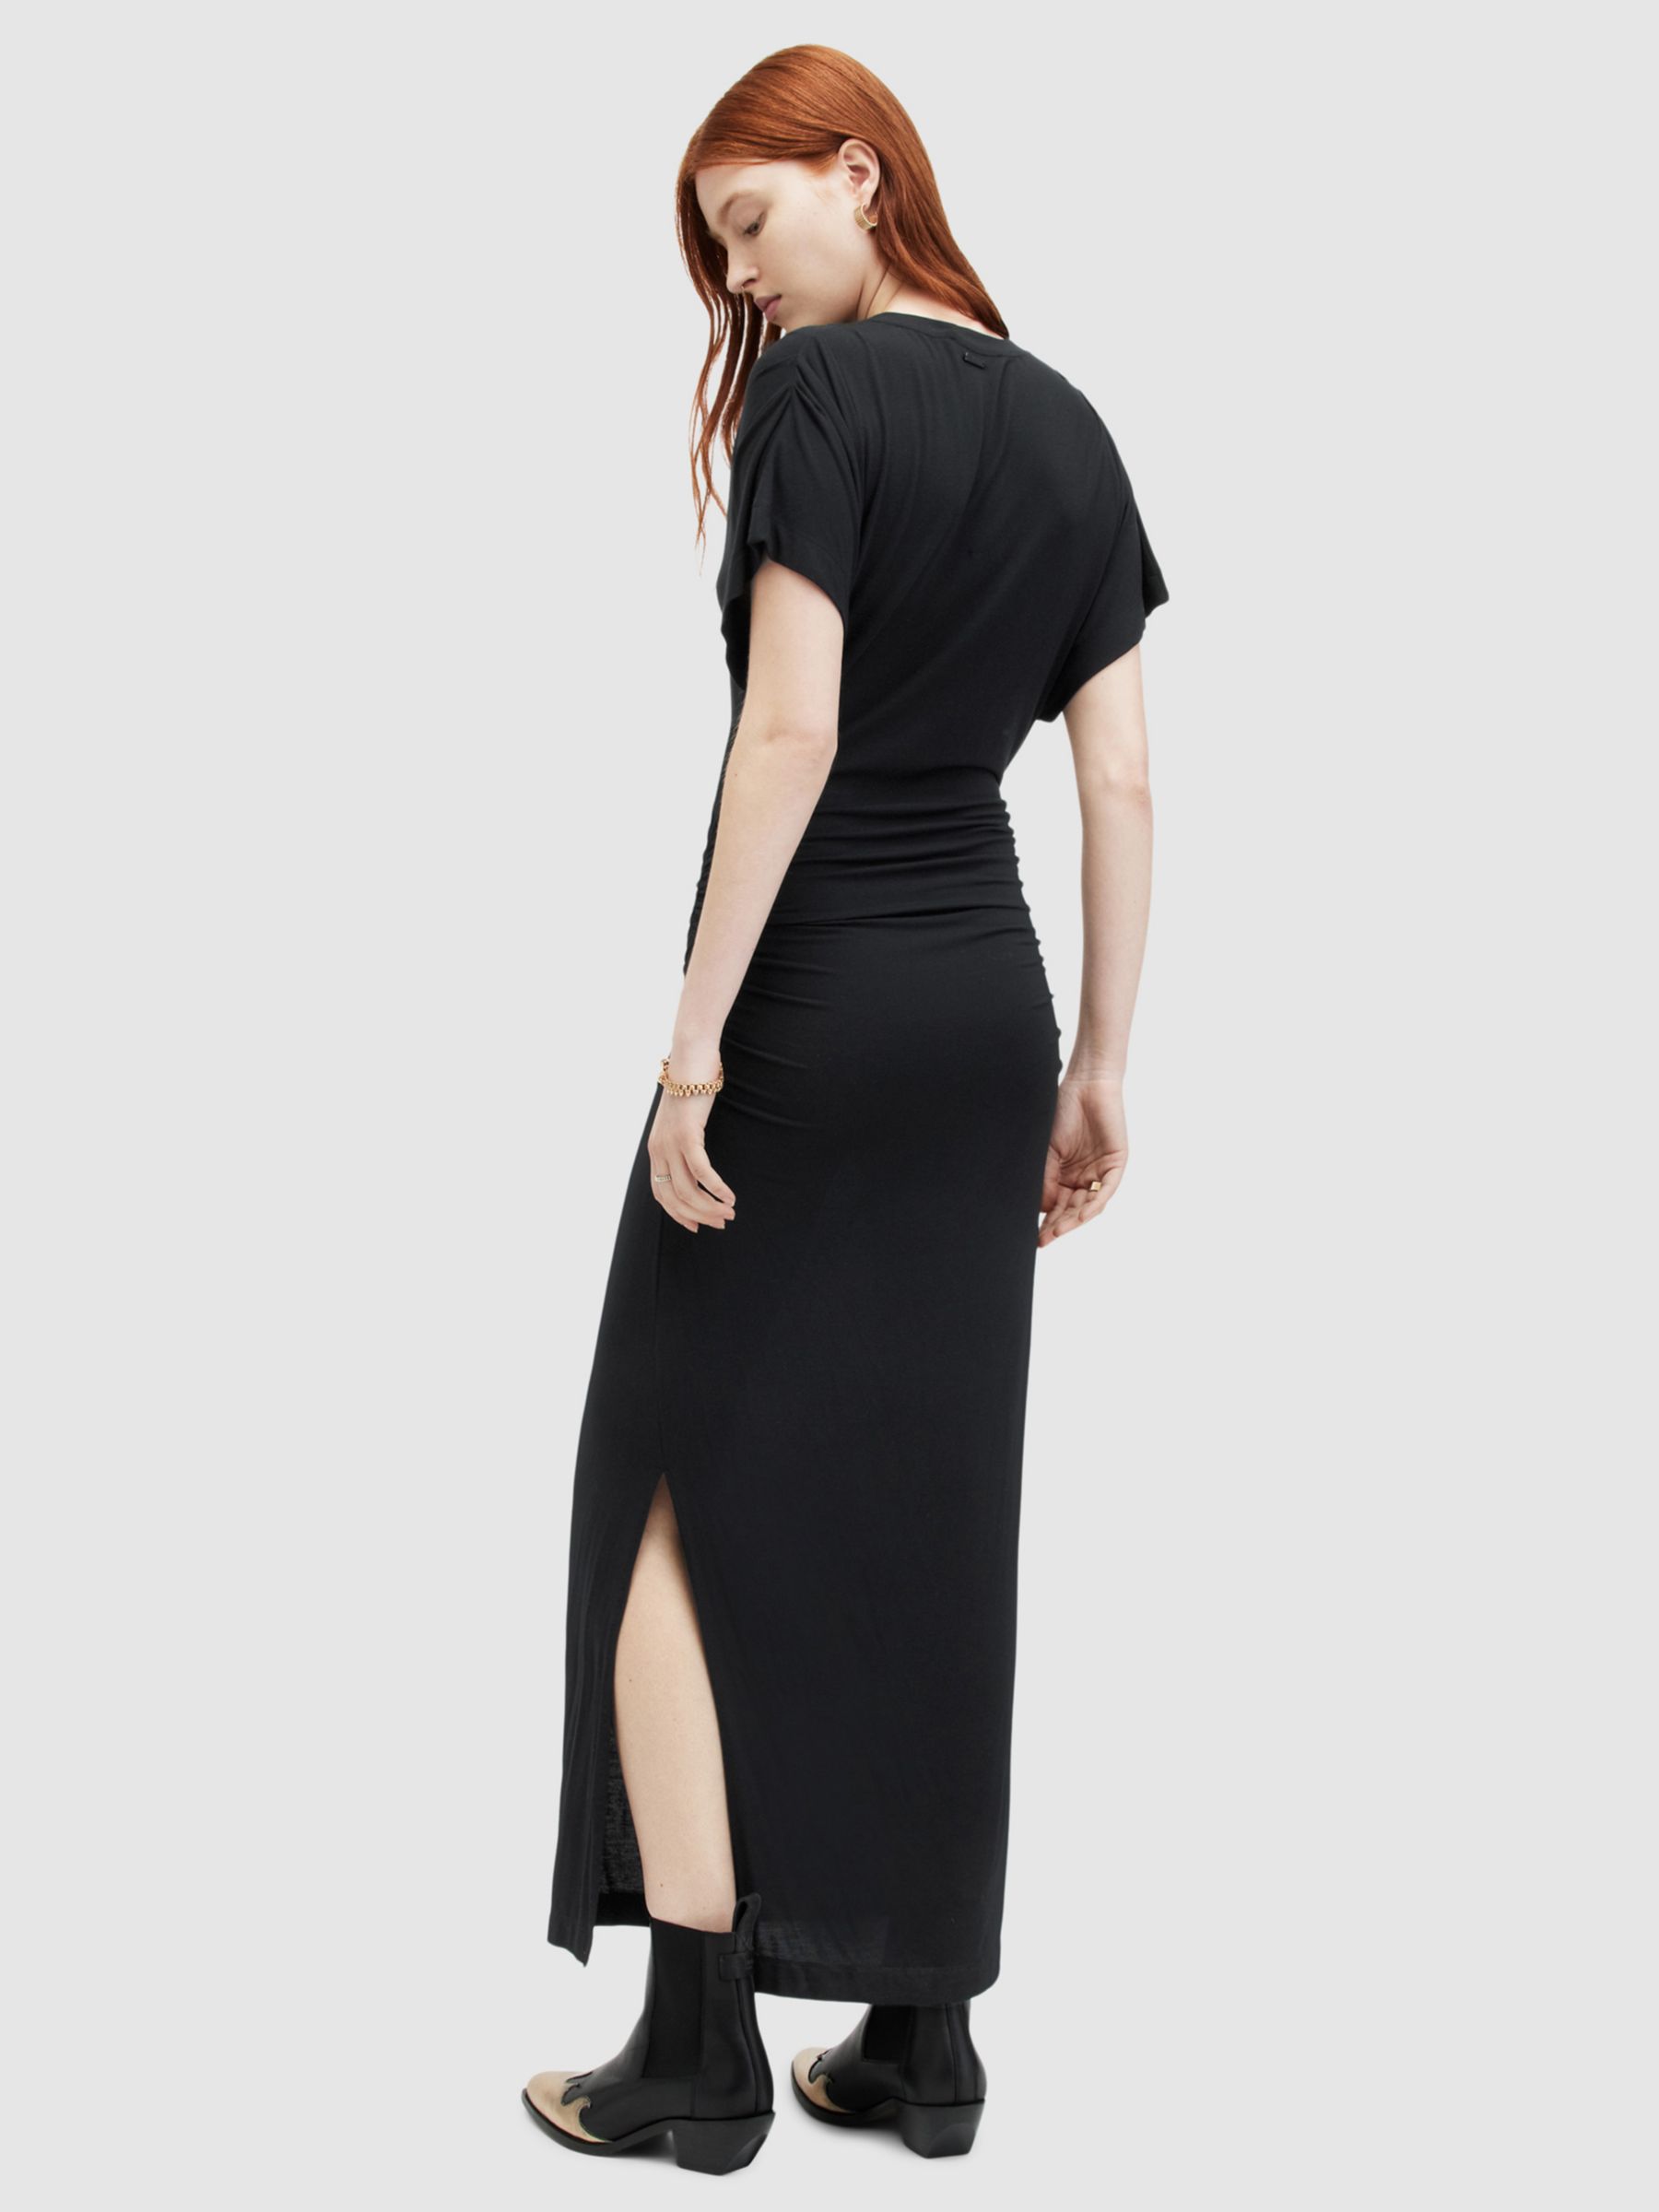 AllSaints Natalie Ruched Jersey Maxi Dress, Black, 12